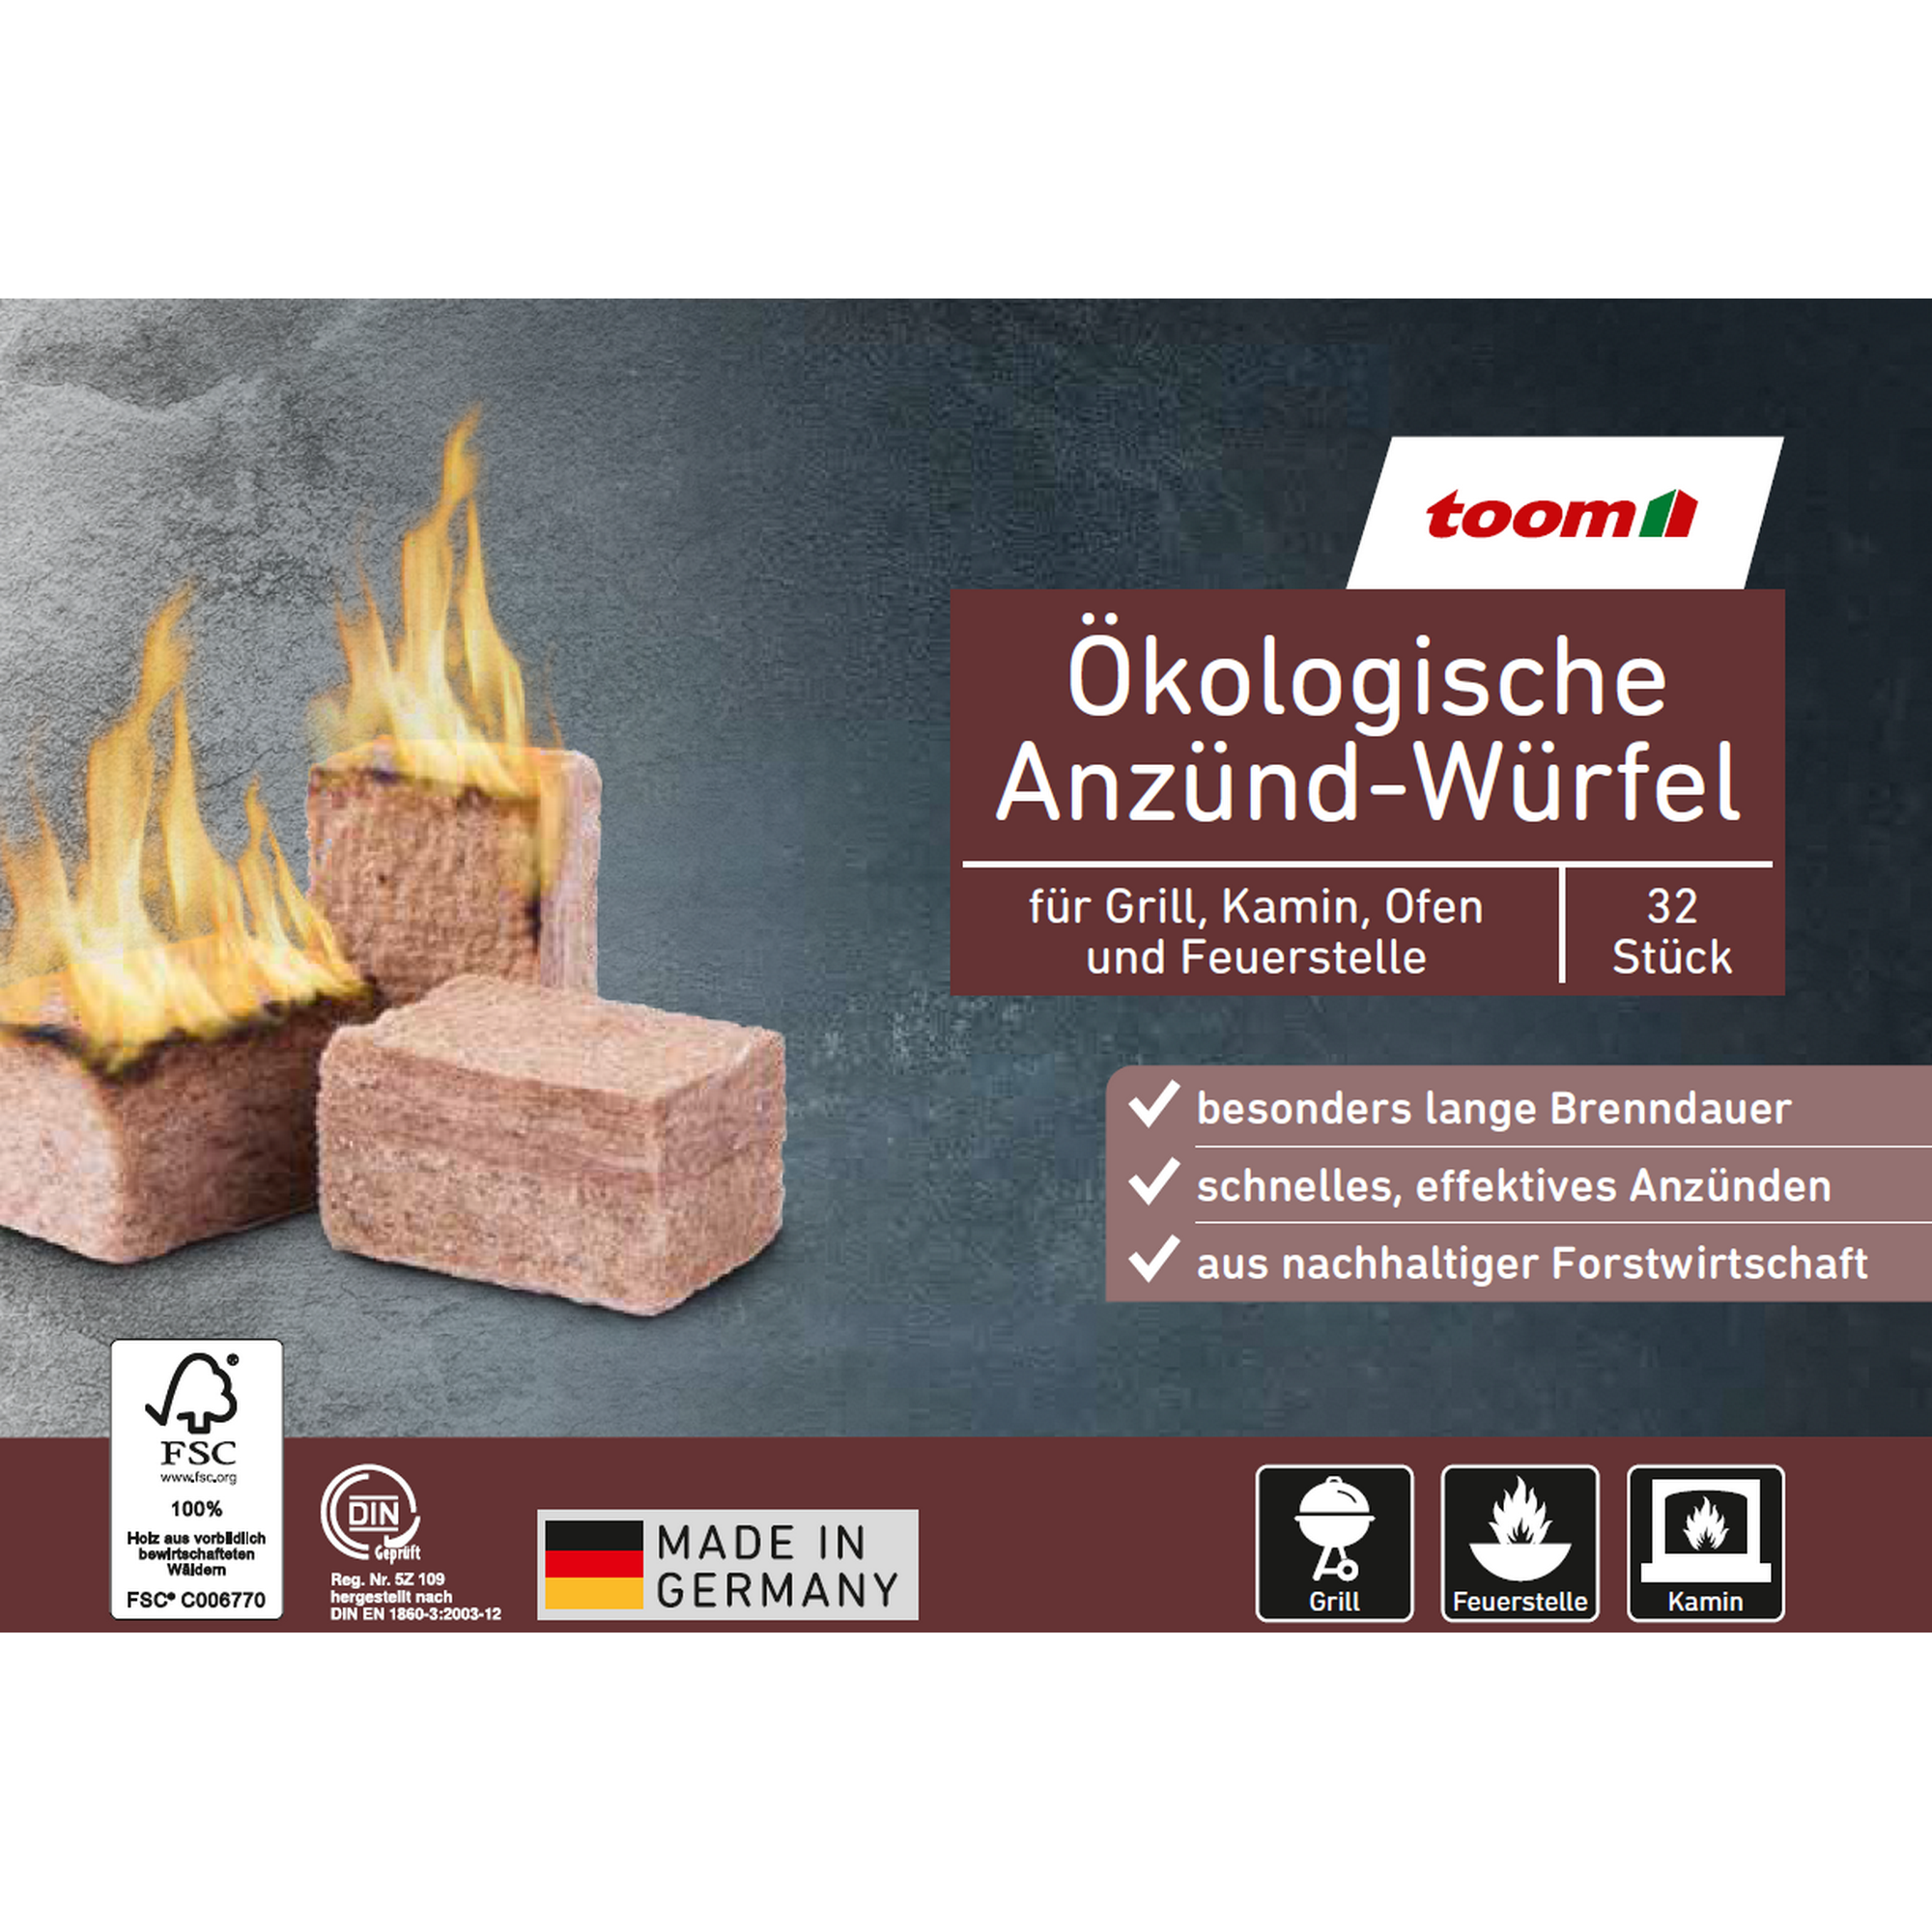 Öko-Anzünd-Würfel 32 Stück + product picture